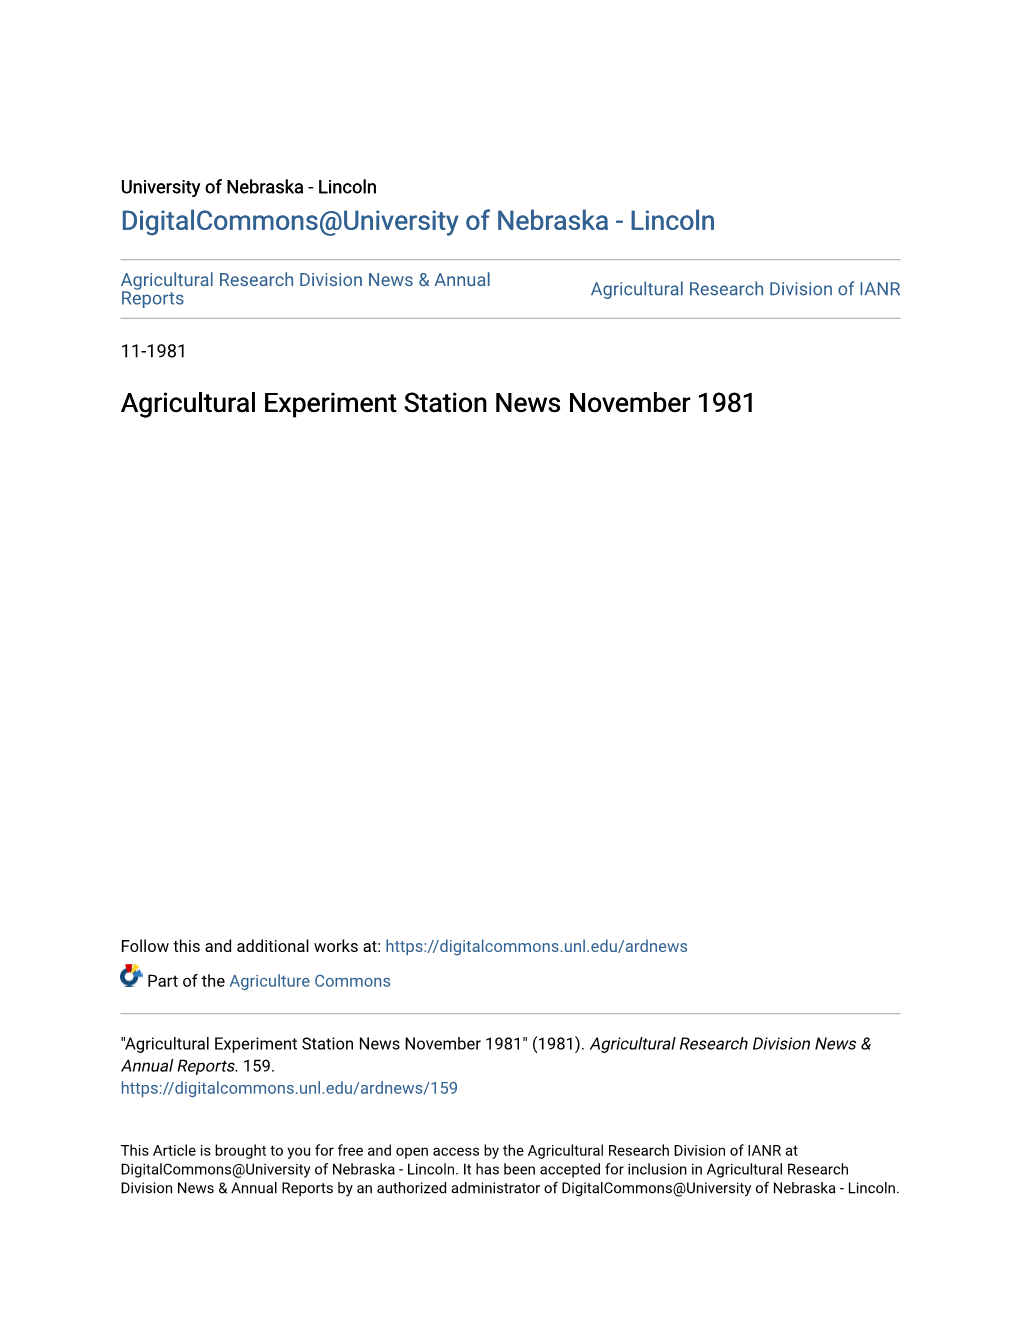 Agricultural Experiment Station News November 1981